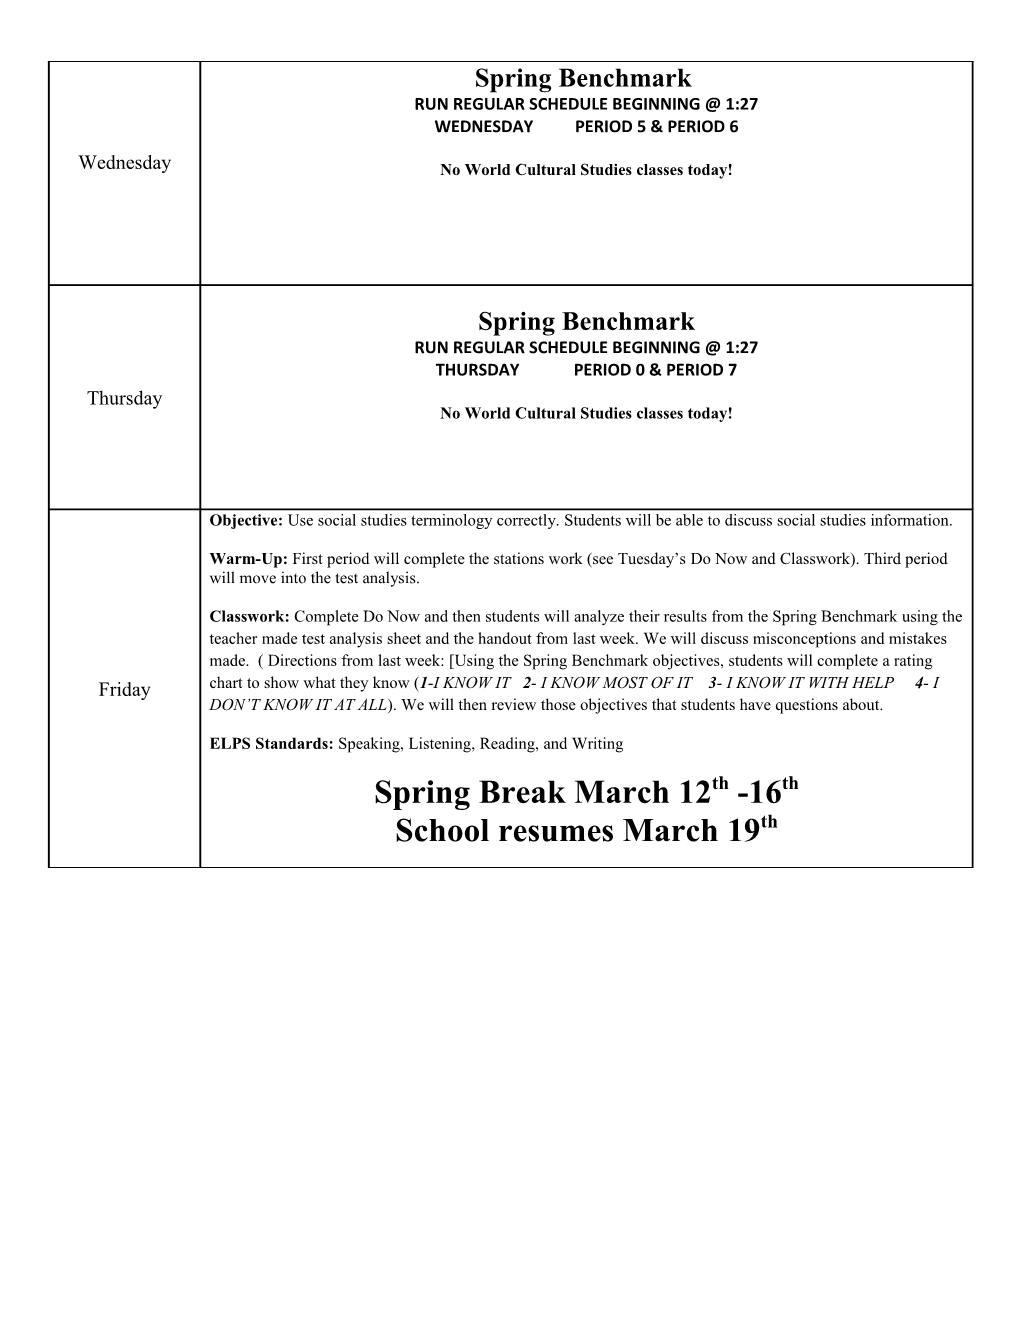 Teacher Name: Roderick Steward Week Of: Mar 5-9, 2012